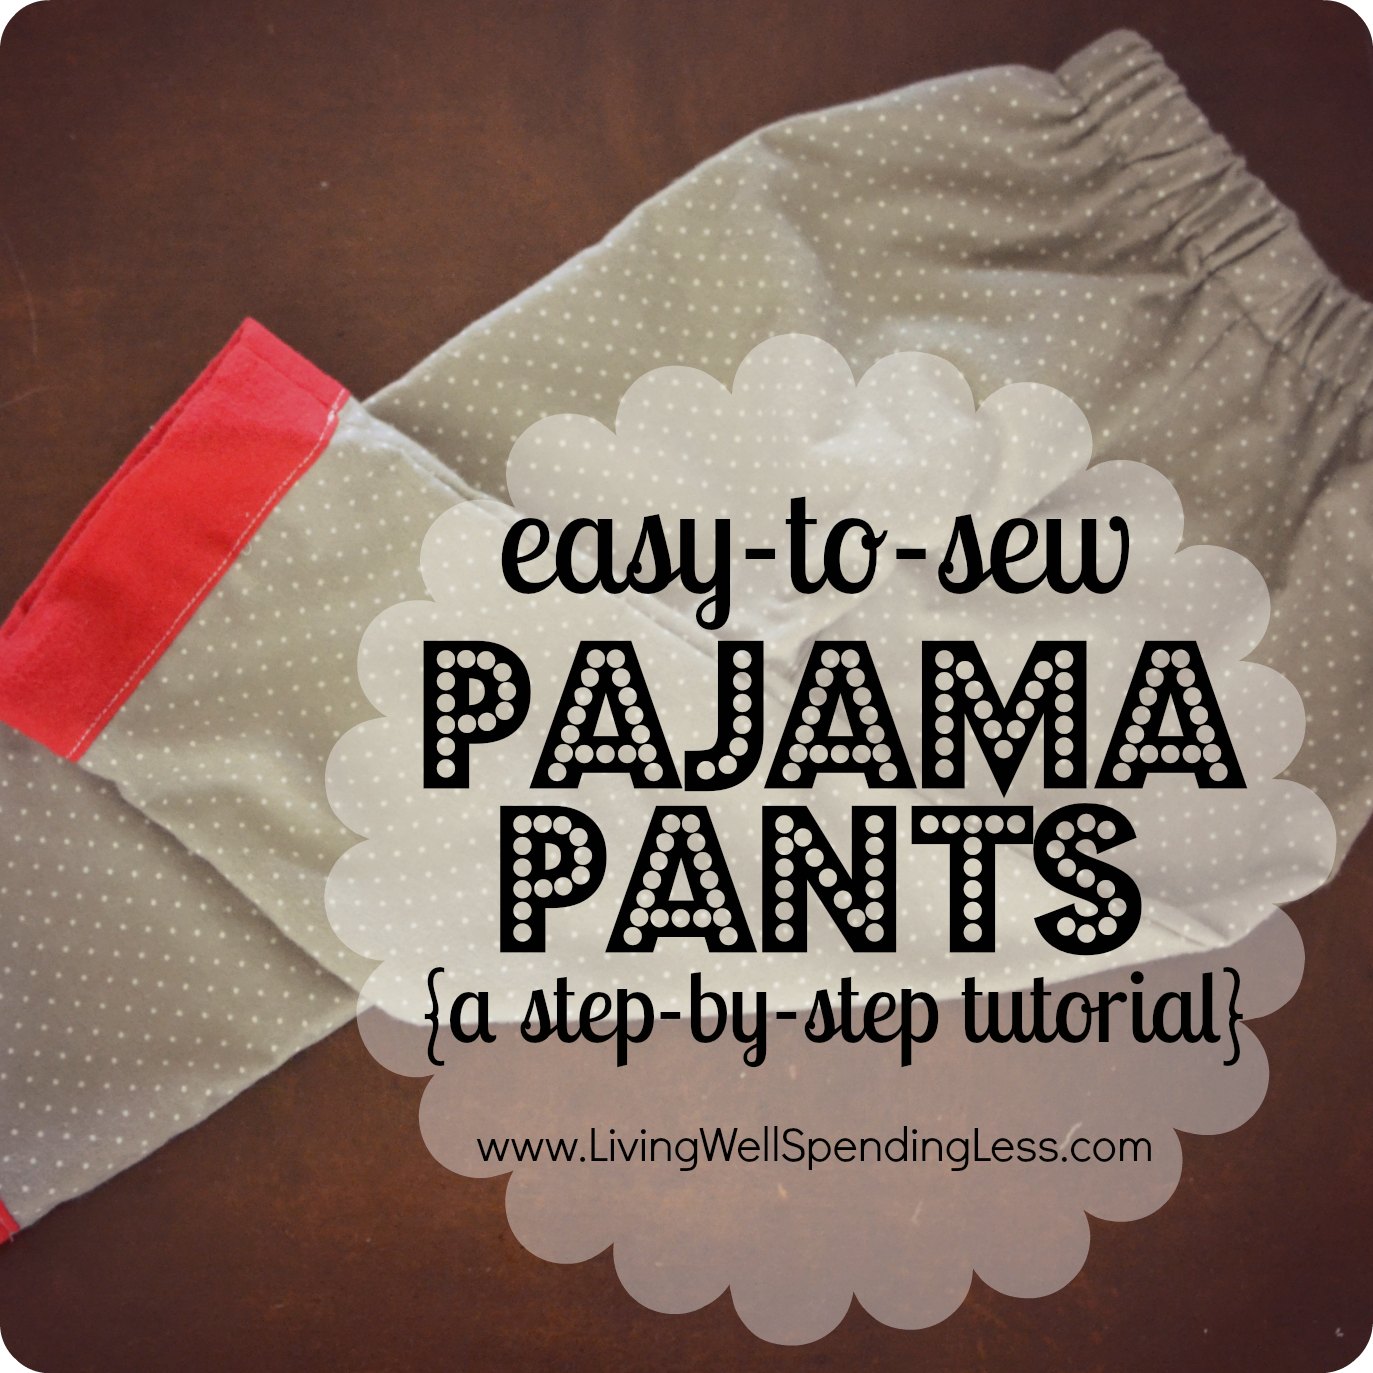 Easy-to-Sew Pajama Pants Tutorial | How to Make Pajama Pants